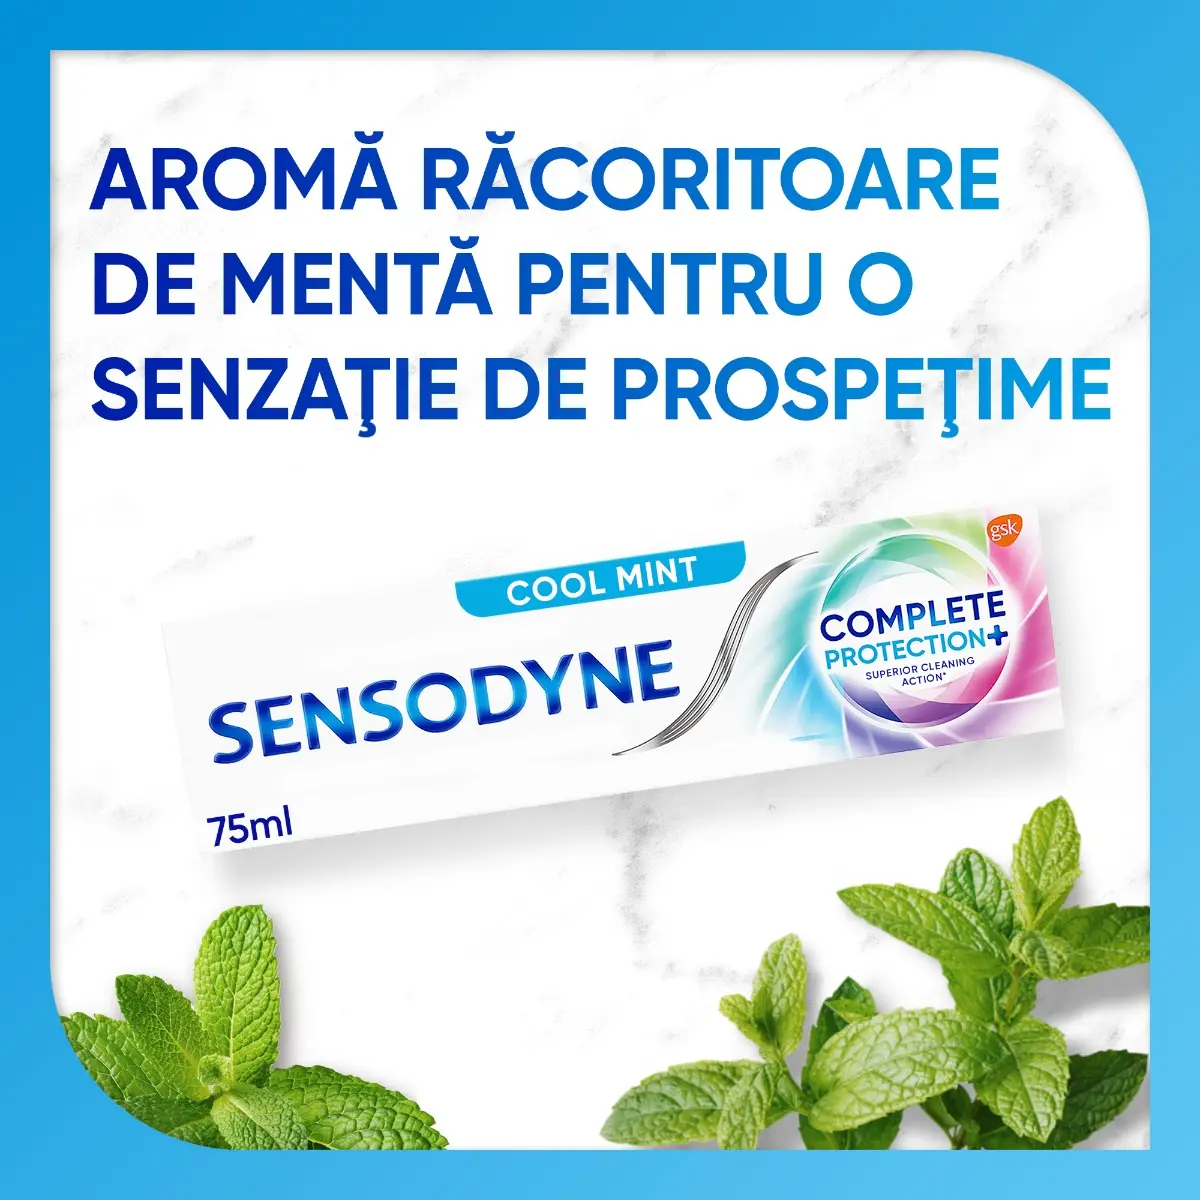 Pasta de dinti Sensodyne Complete Protection Plus, 75 ml